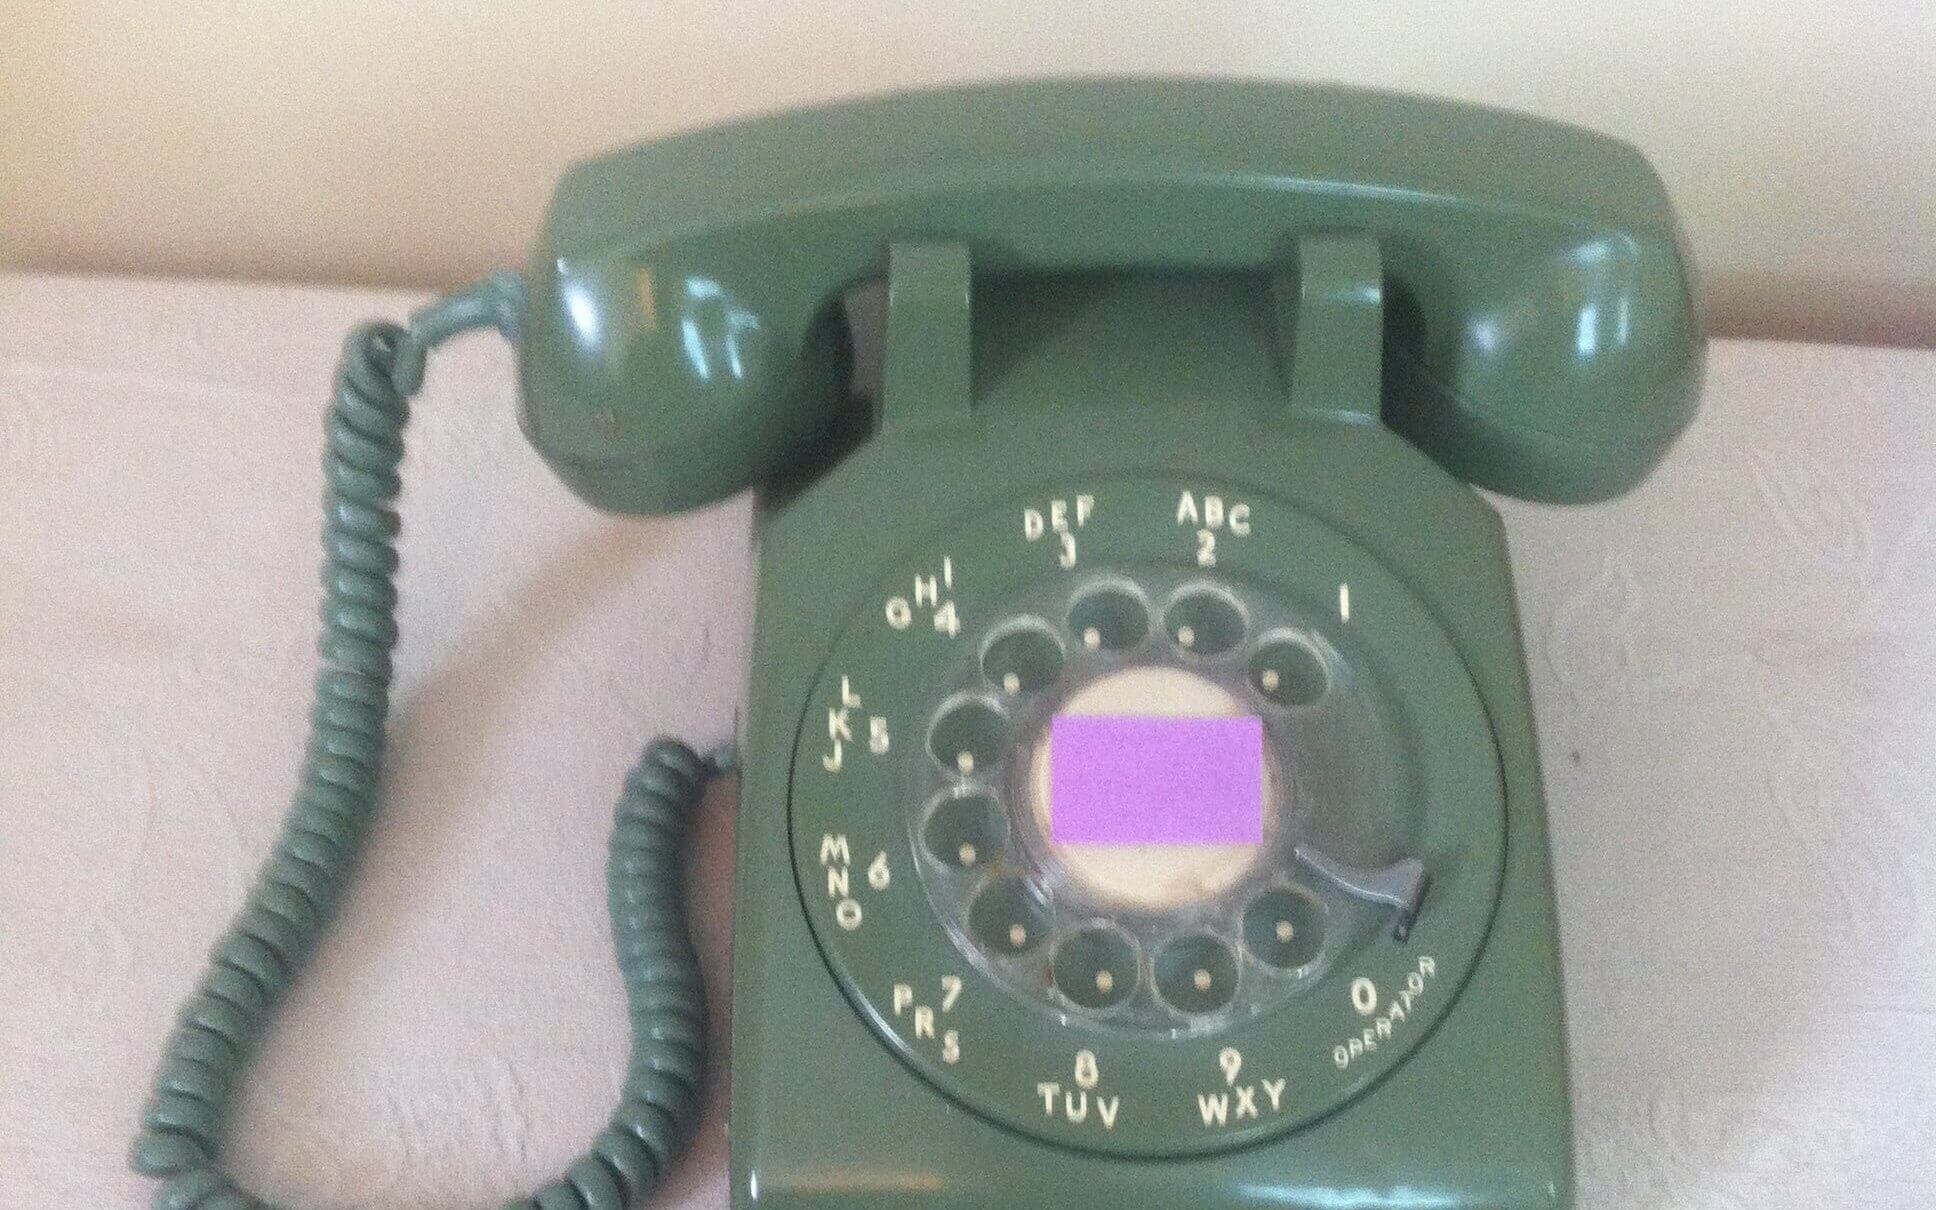 Téléphone ancien à cadran